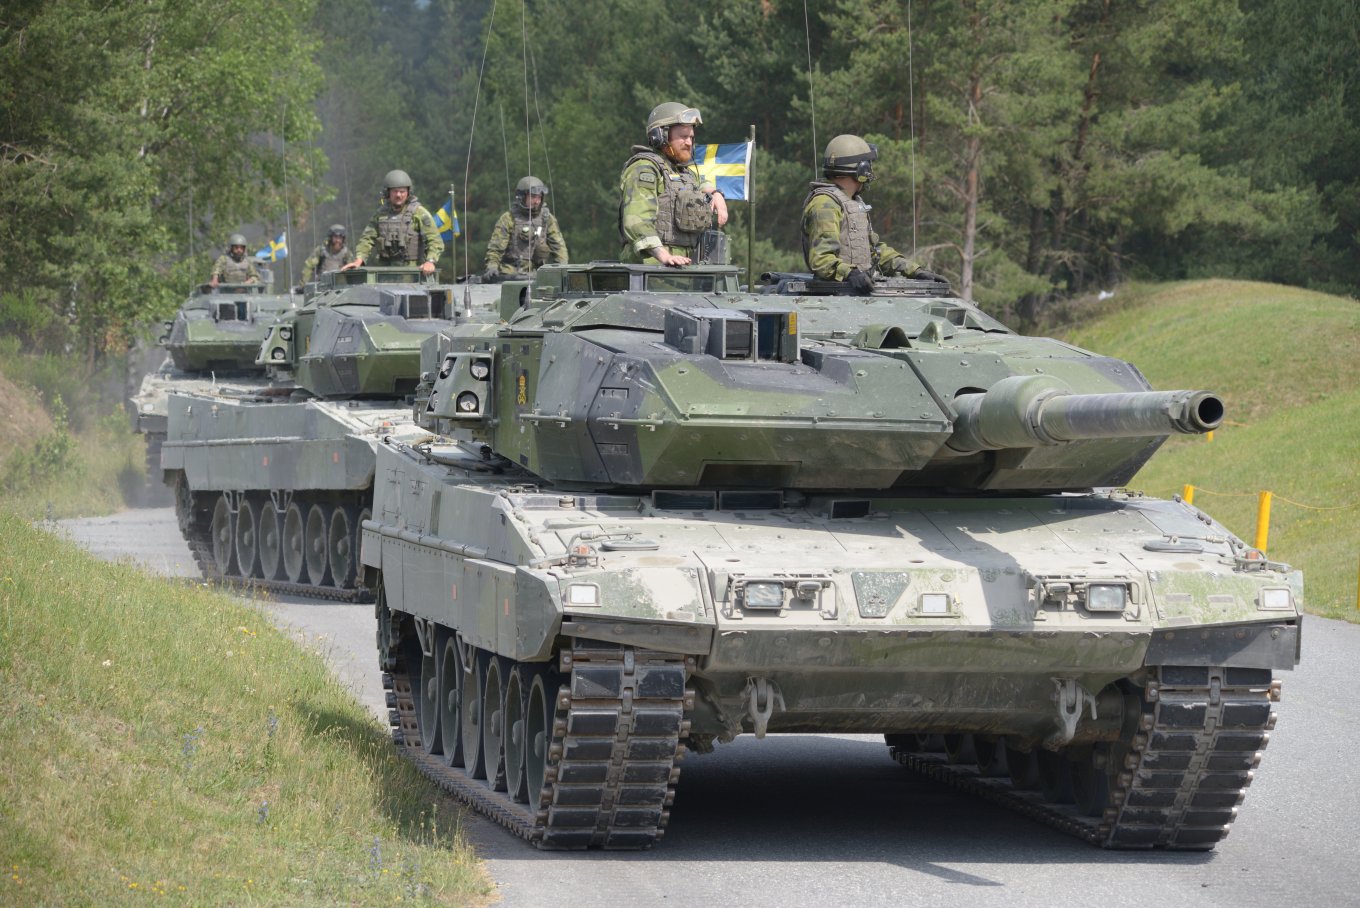 Swedish Stridsvagn 122